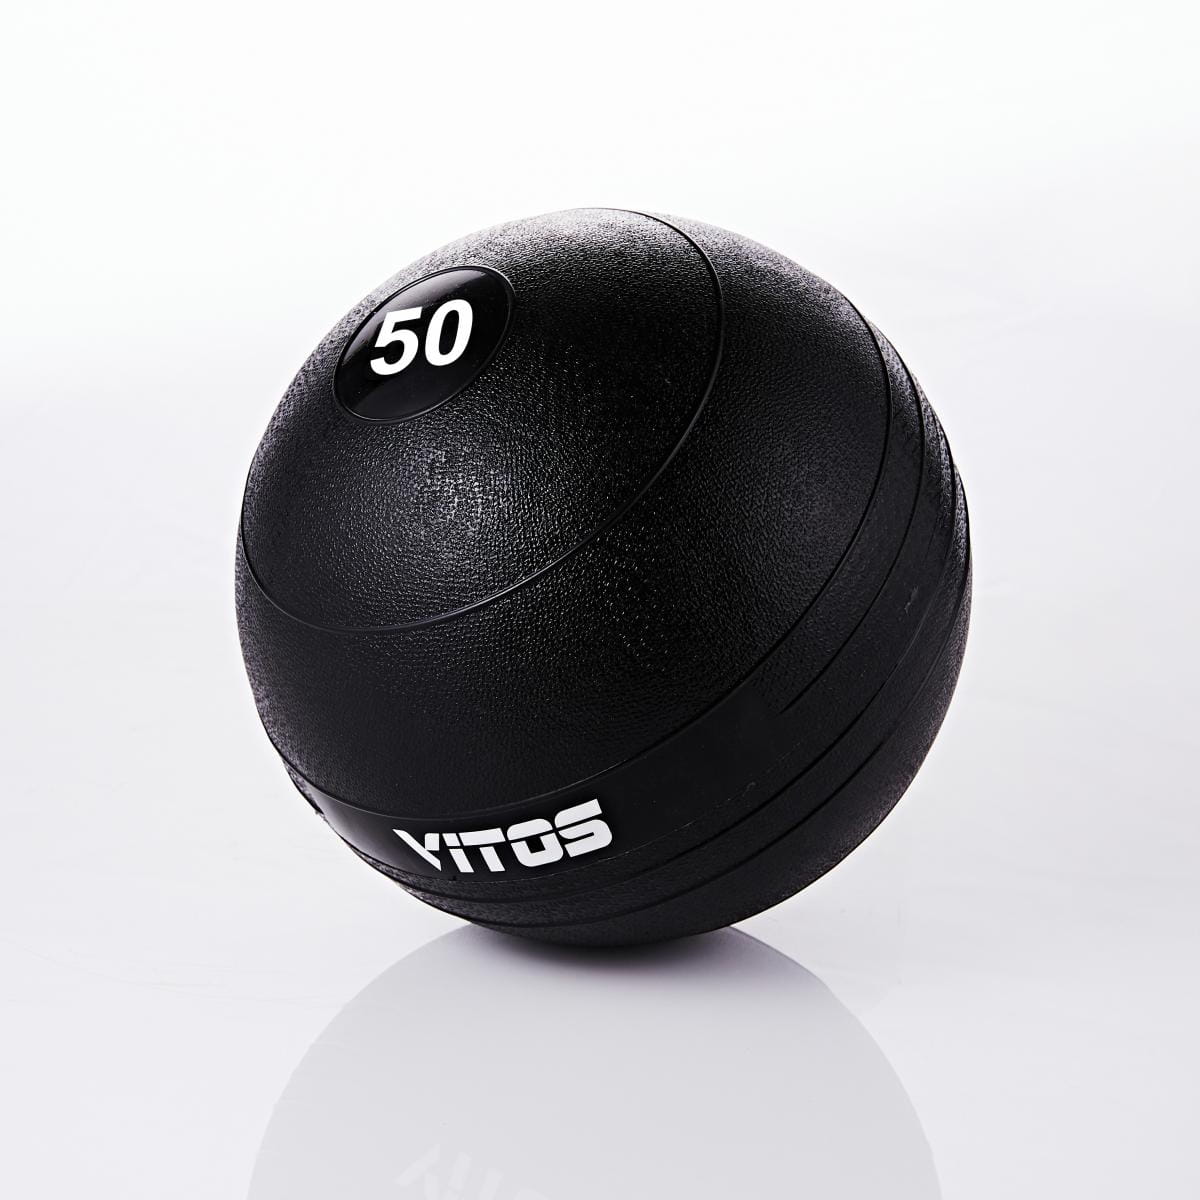 VITOS 重力球 50磅 23公斤 0